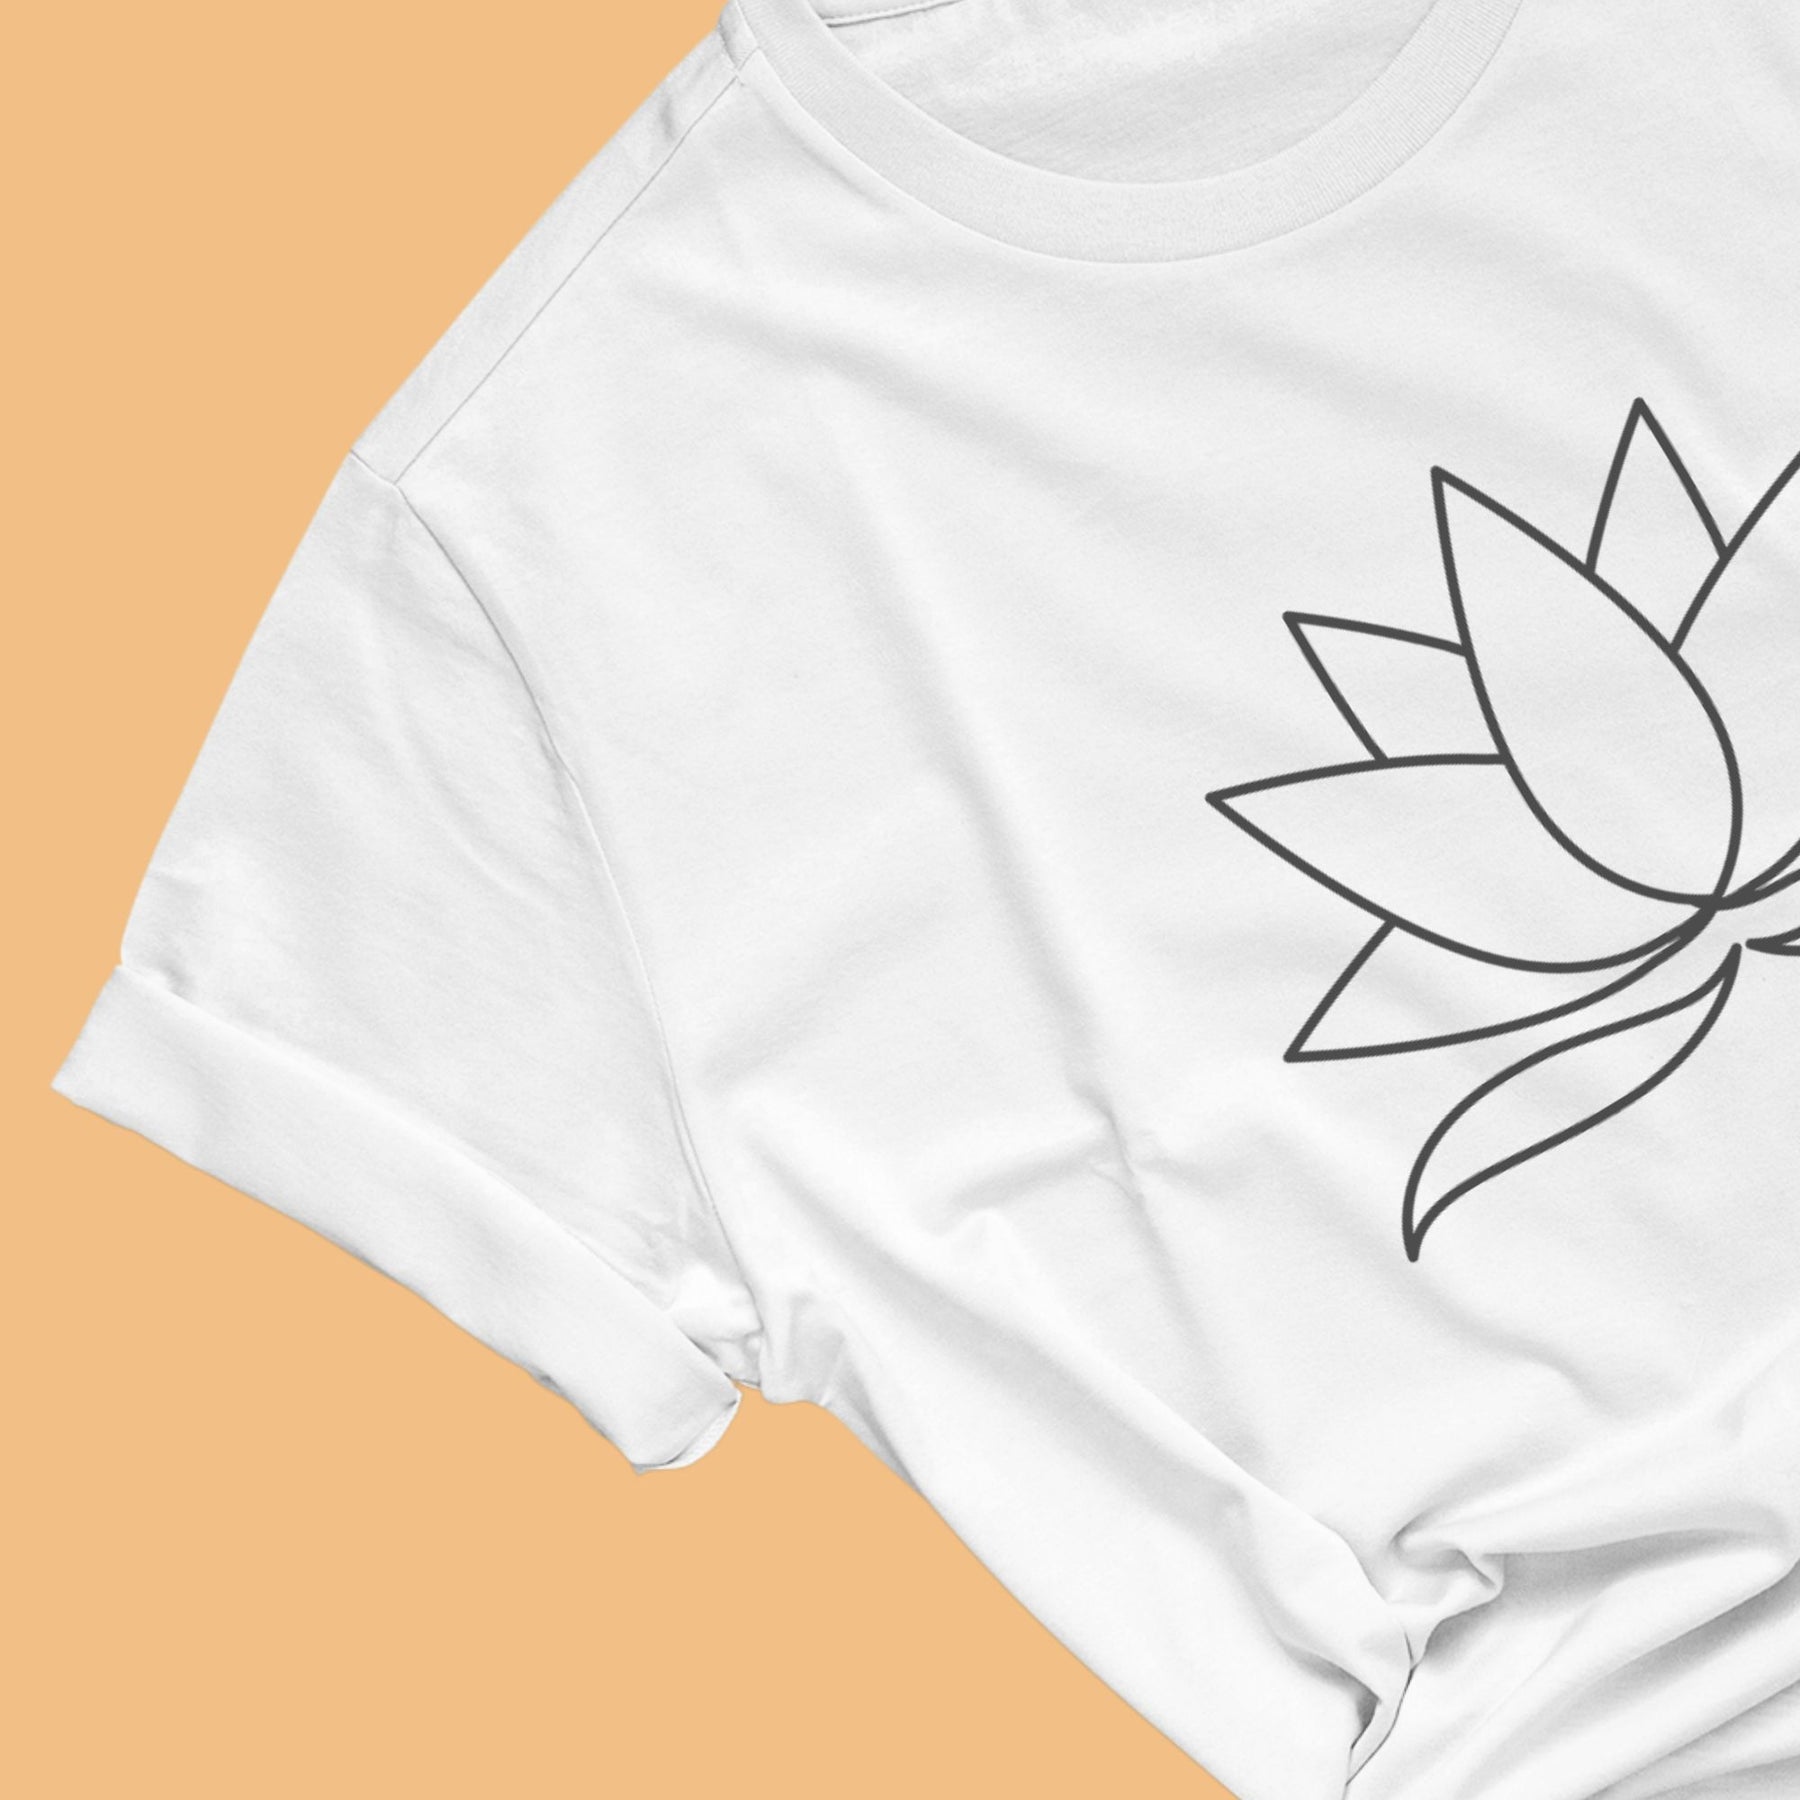 lotus-leaf-stroke-mind-body-spirit-yogic-t-shirt-s-meditation-yoga-love-white-women-printed-t-shirt